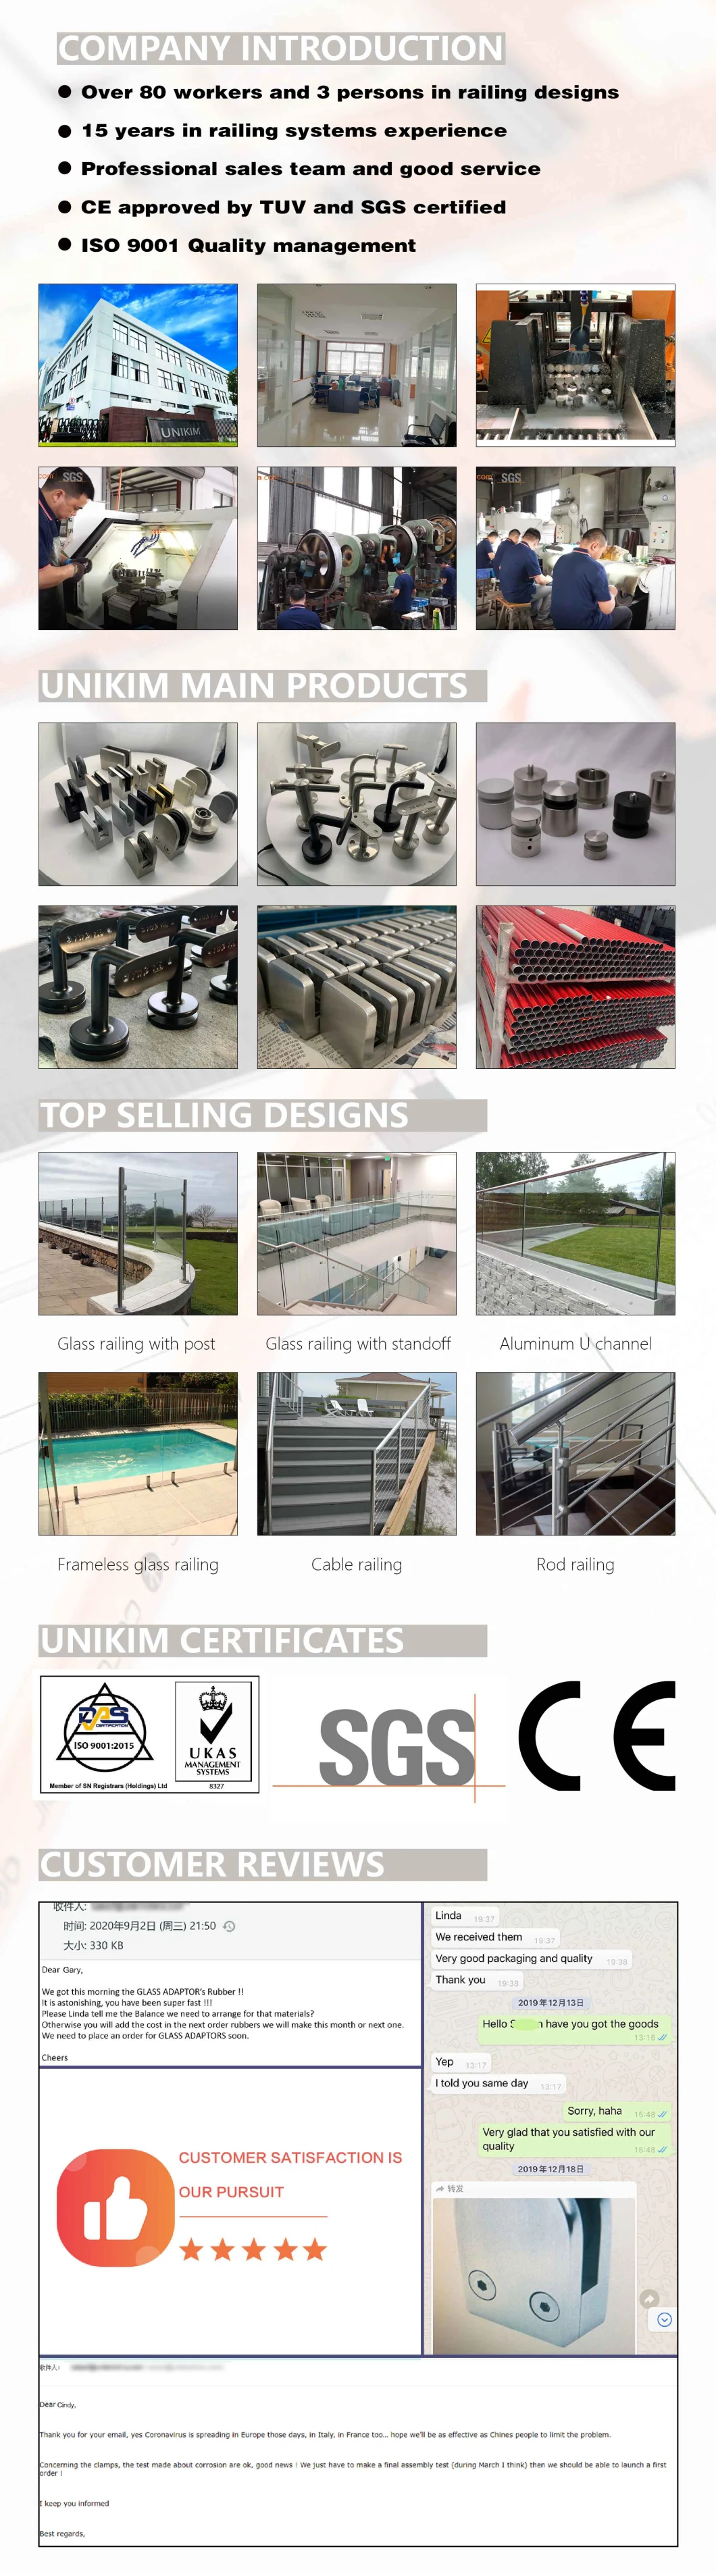 Customized Balcony Railing Shopping Center Handrail Glass Railing Support Fittings